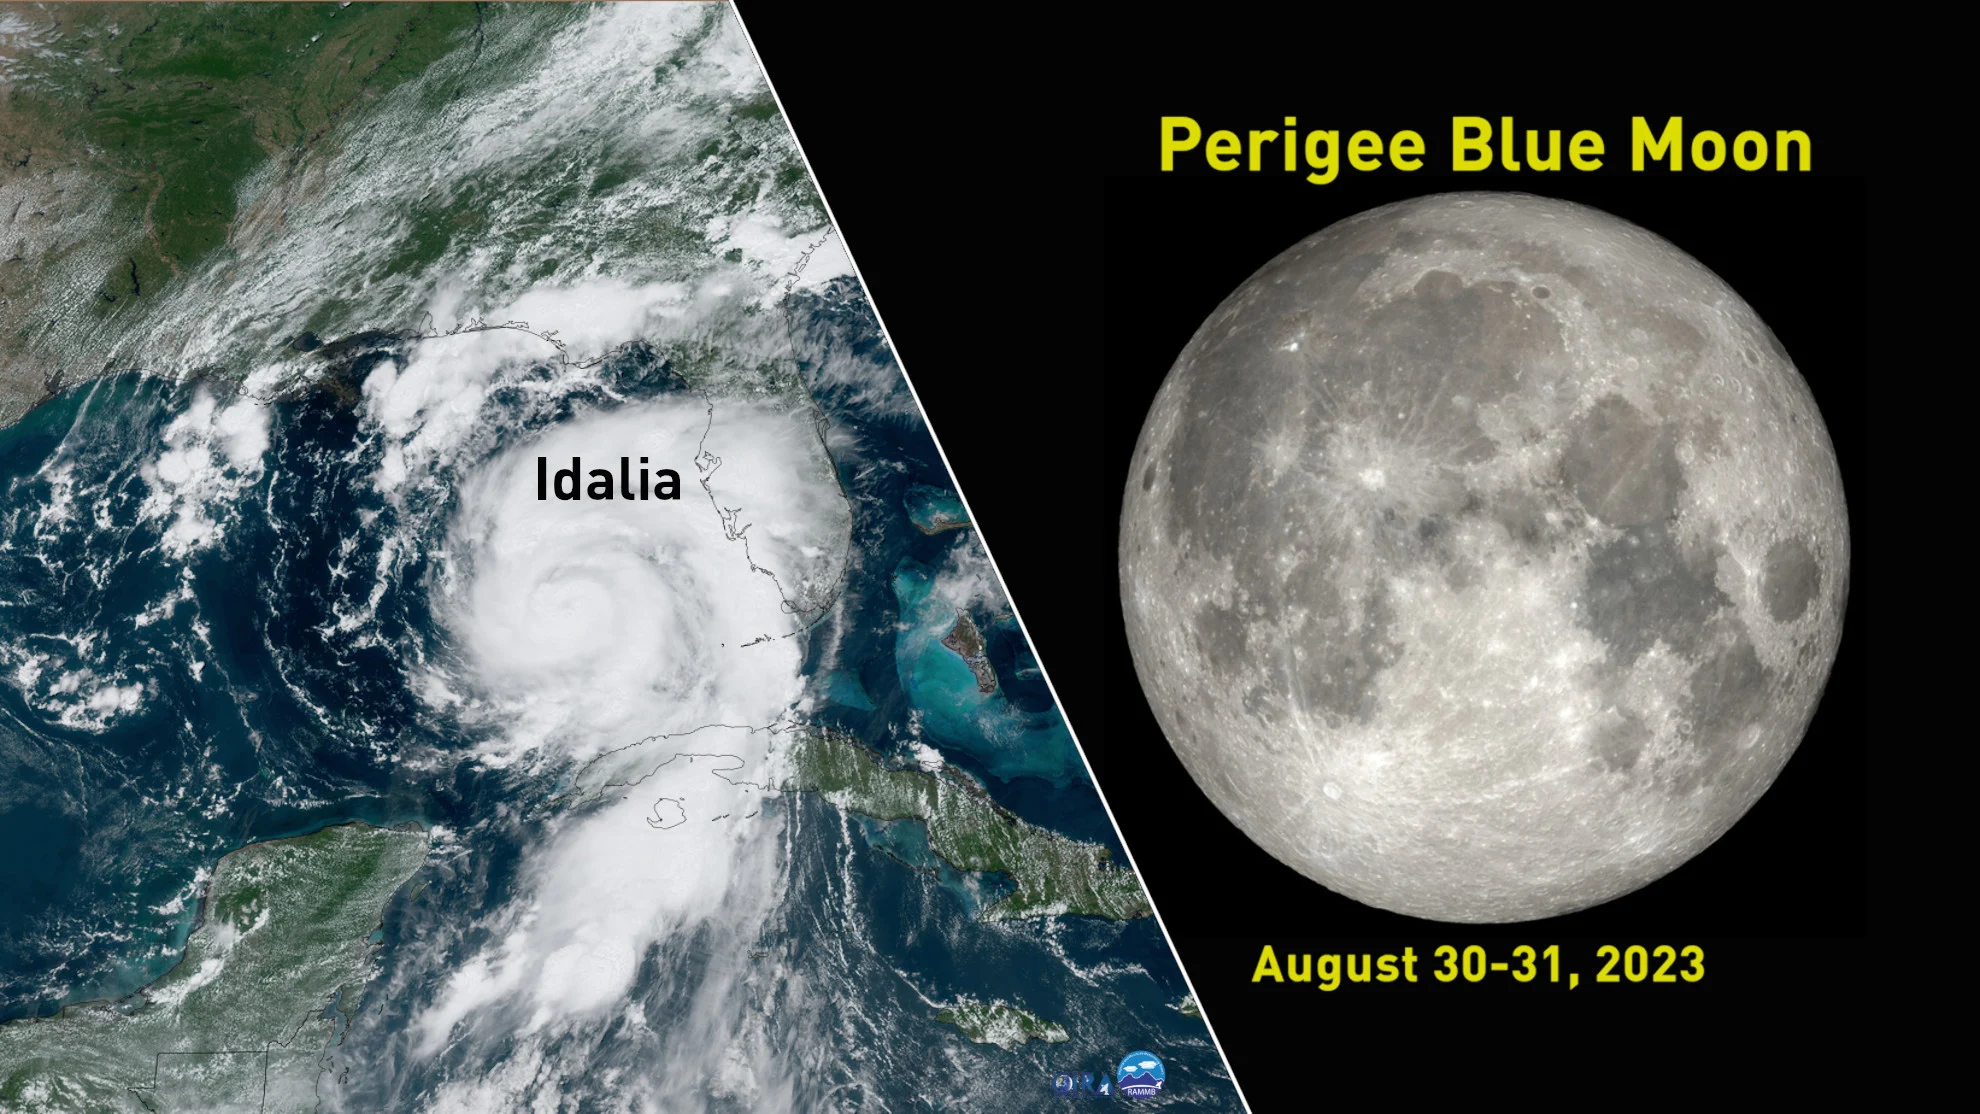 The rare blue supermoon could worsen Hurricane Idalia's impact on Florida